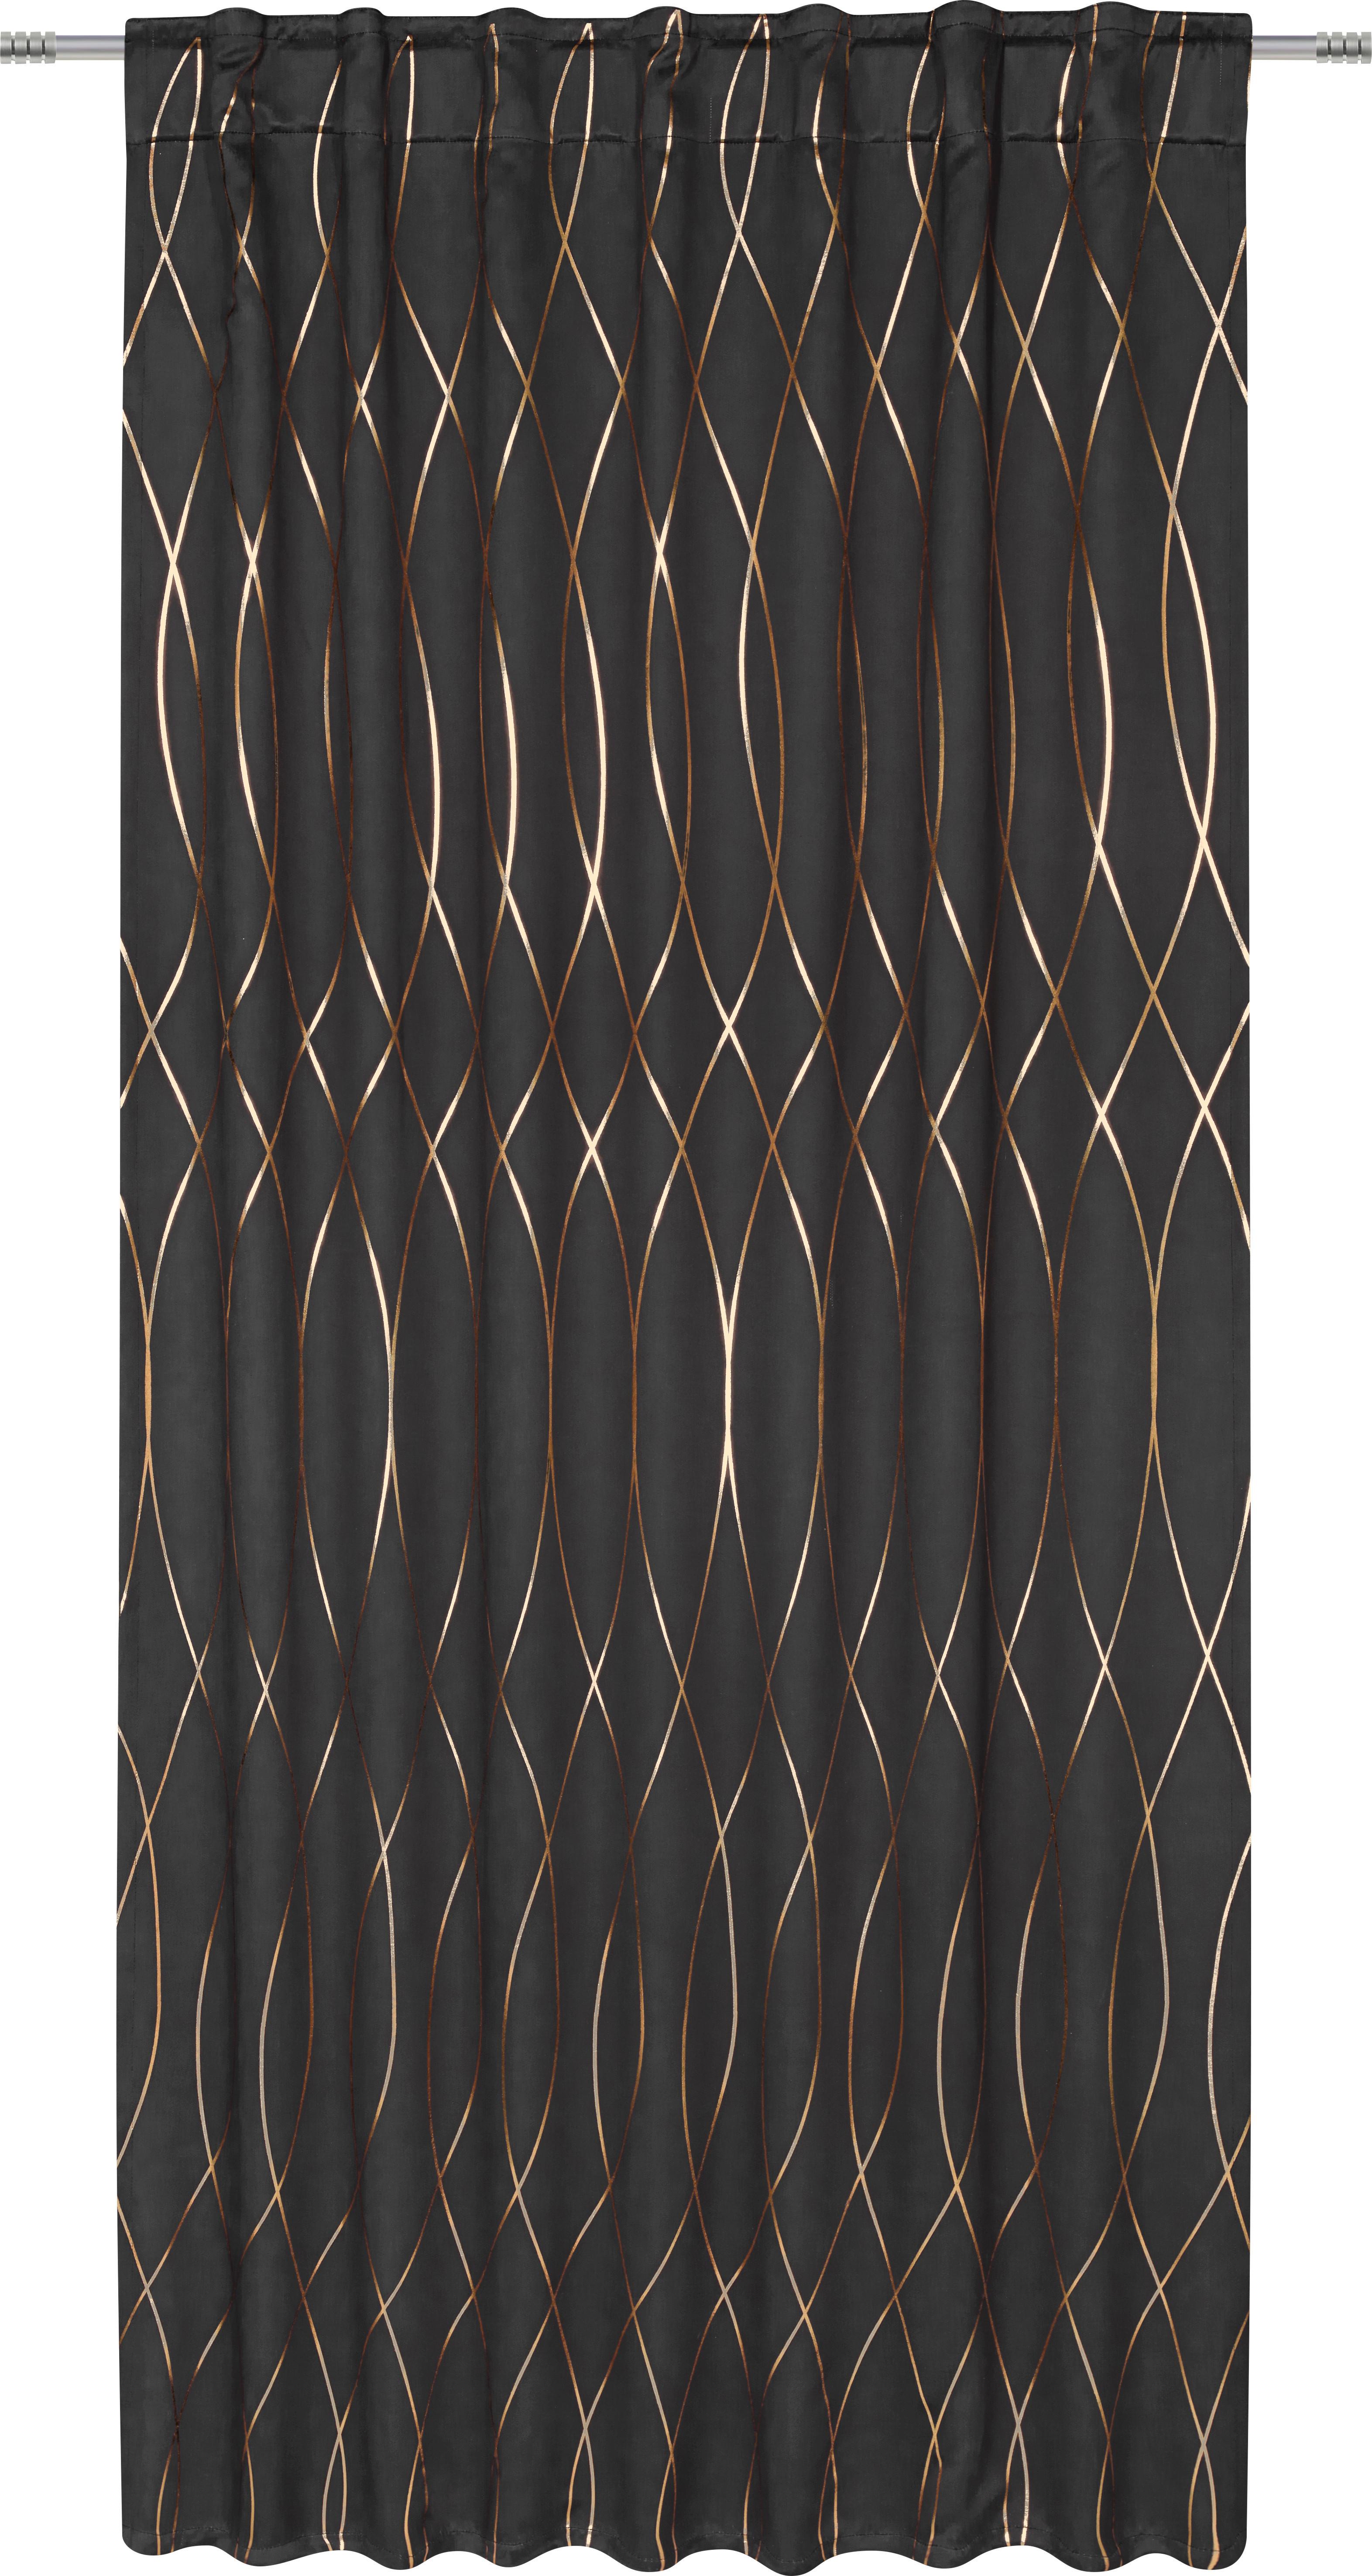 Draperie opacă GLAMOUR - arămiu/negru, Lifestyle, textil (140/245cm) - Modern Living